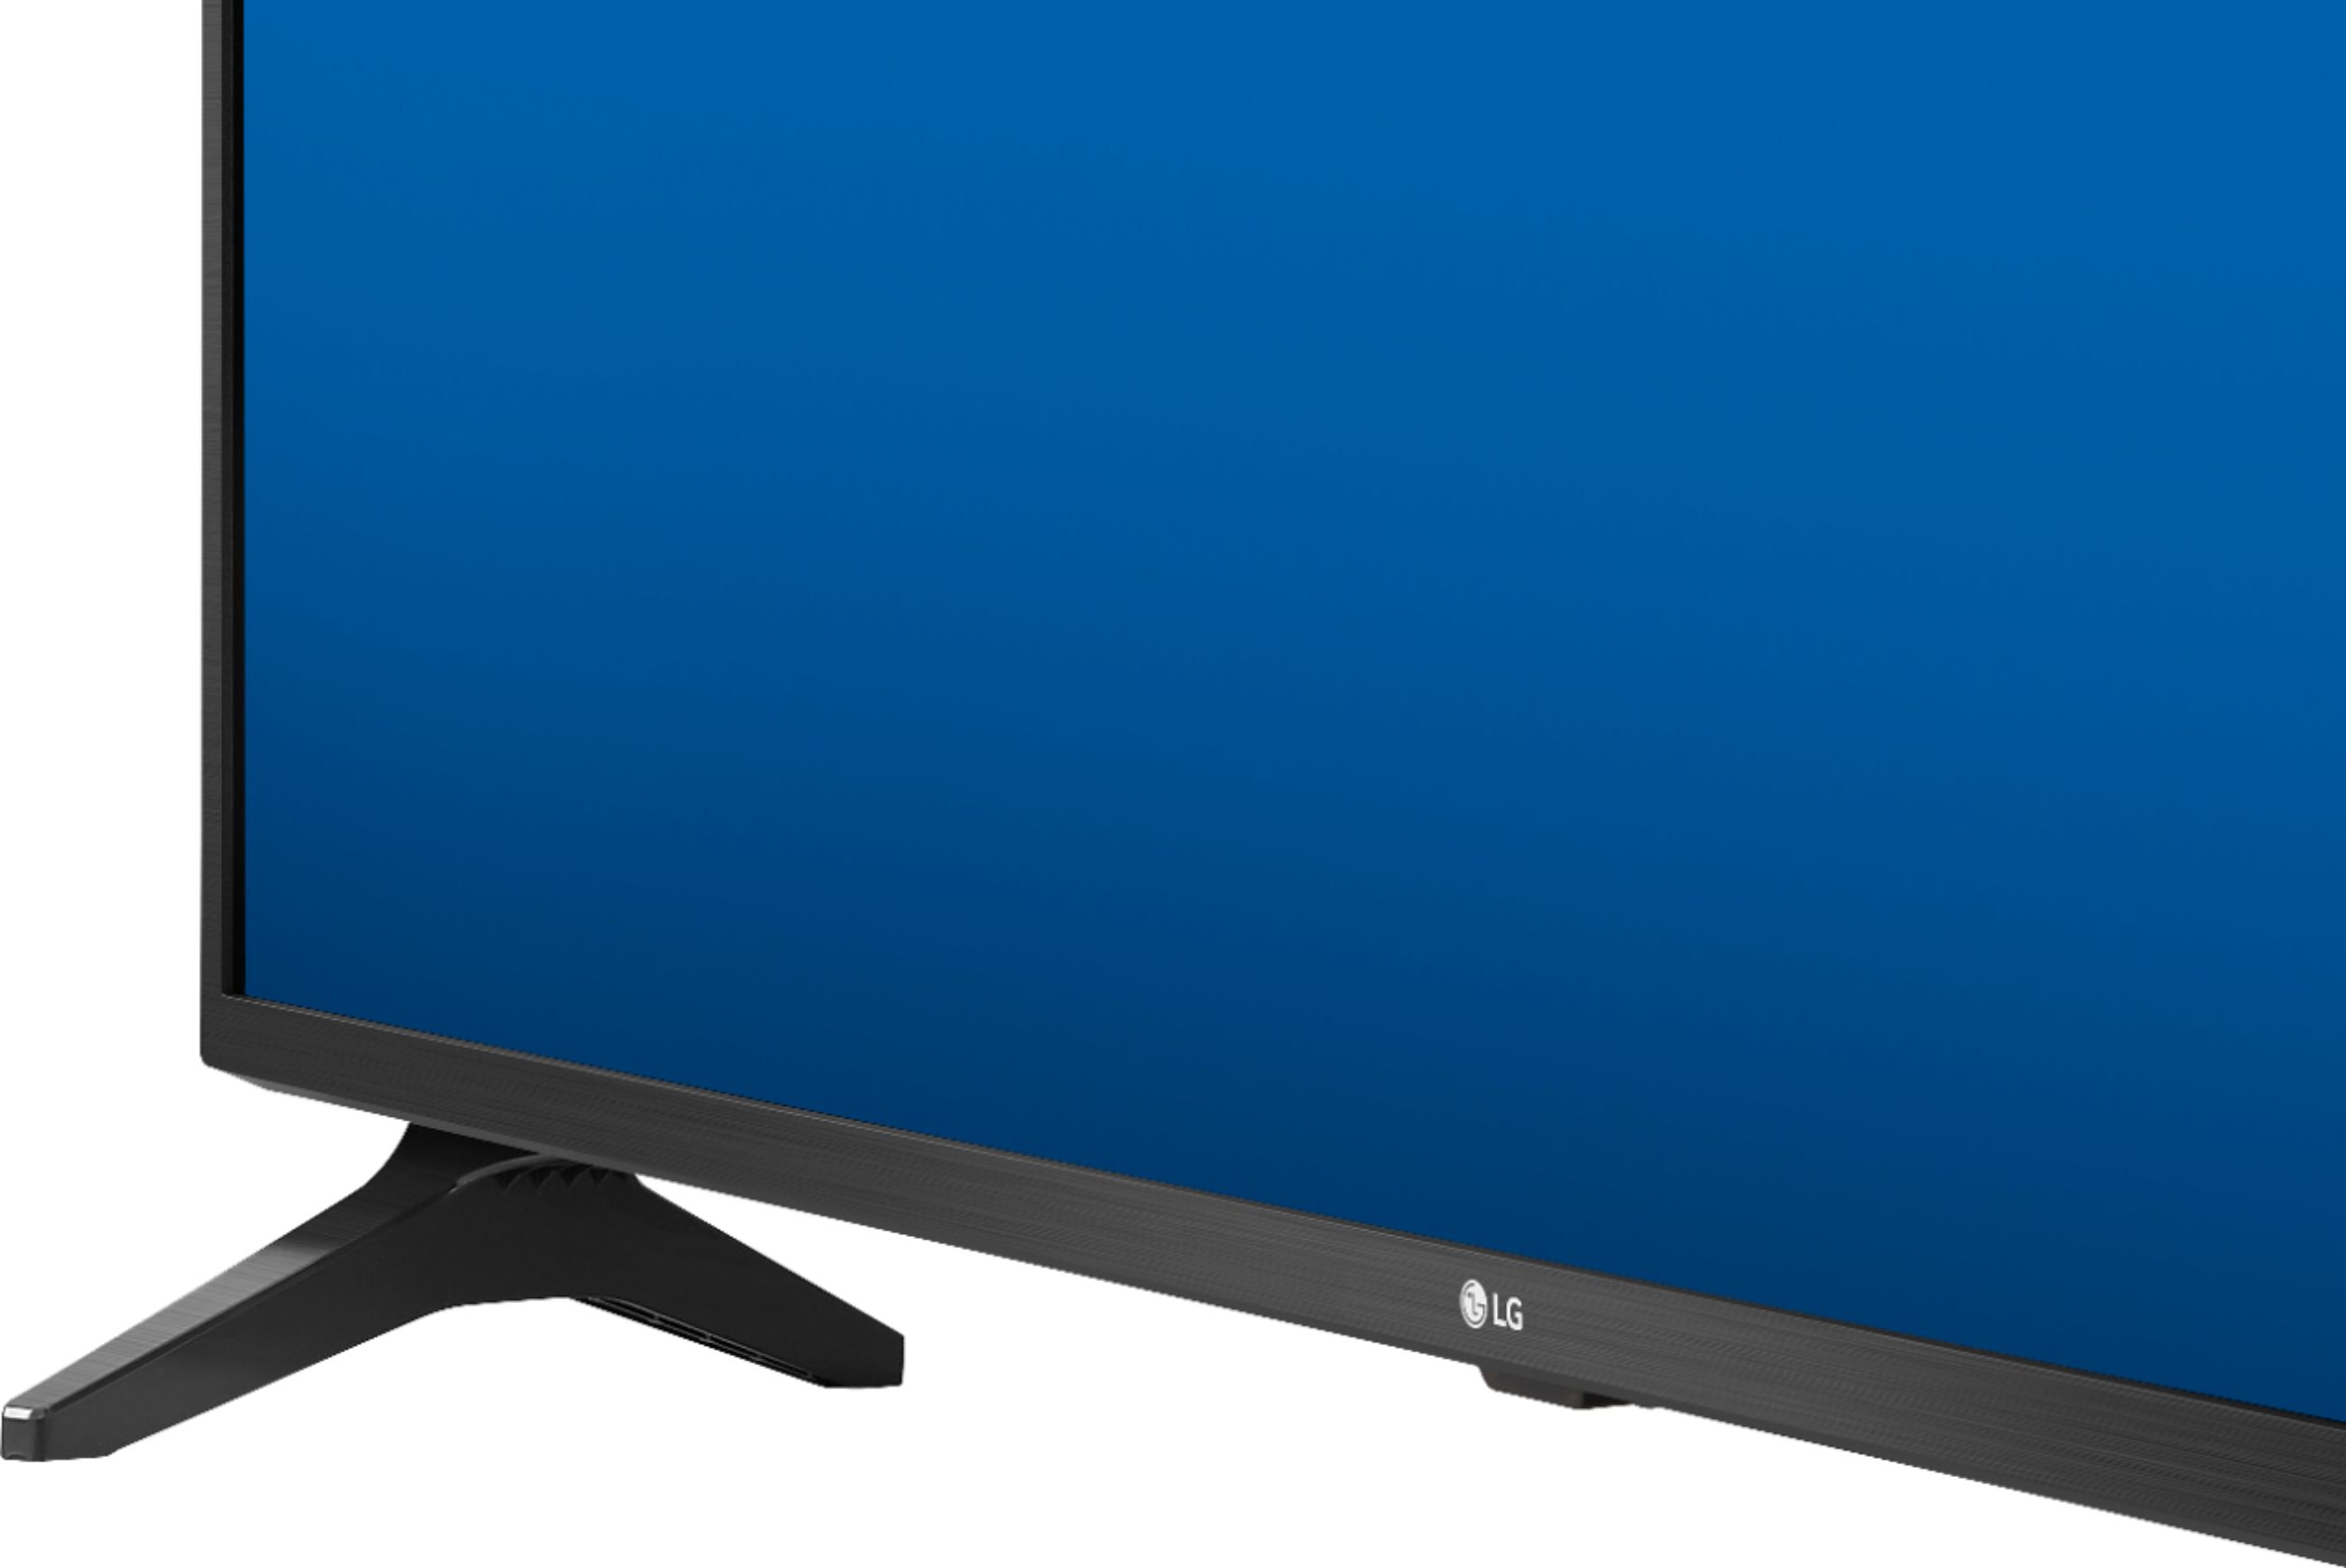 LG 65 Class 4K UHD 2160P Smart TV 65UN7300PUF 2020 Model 